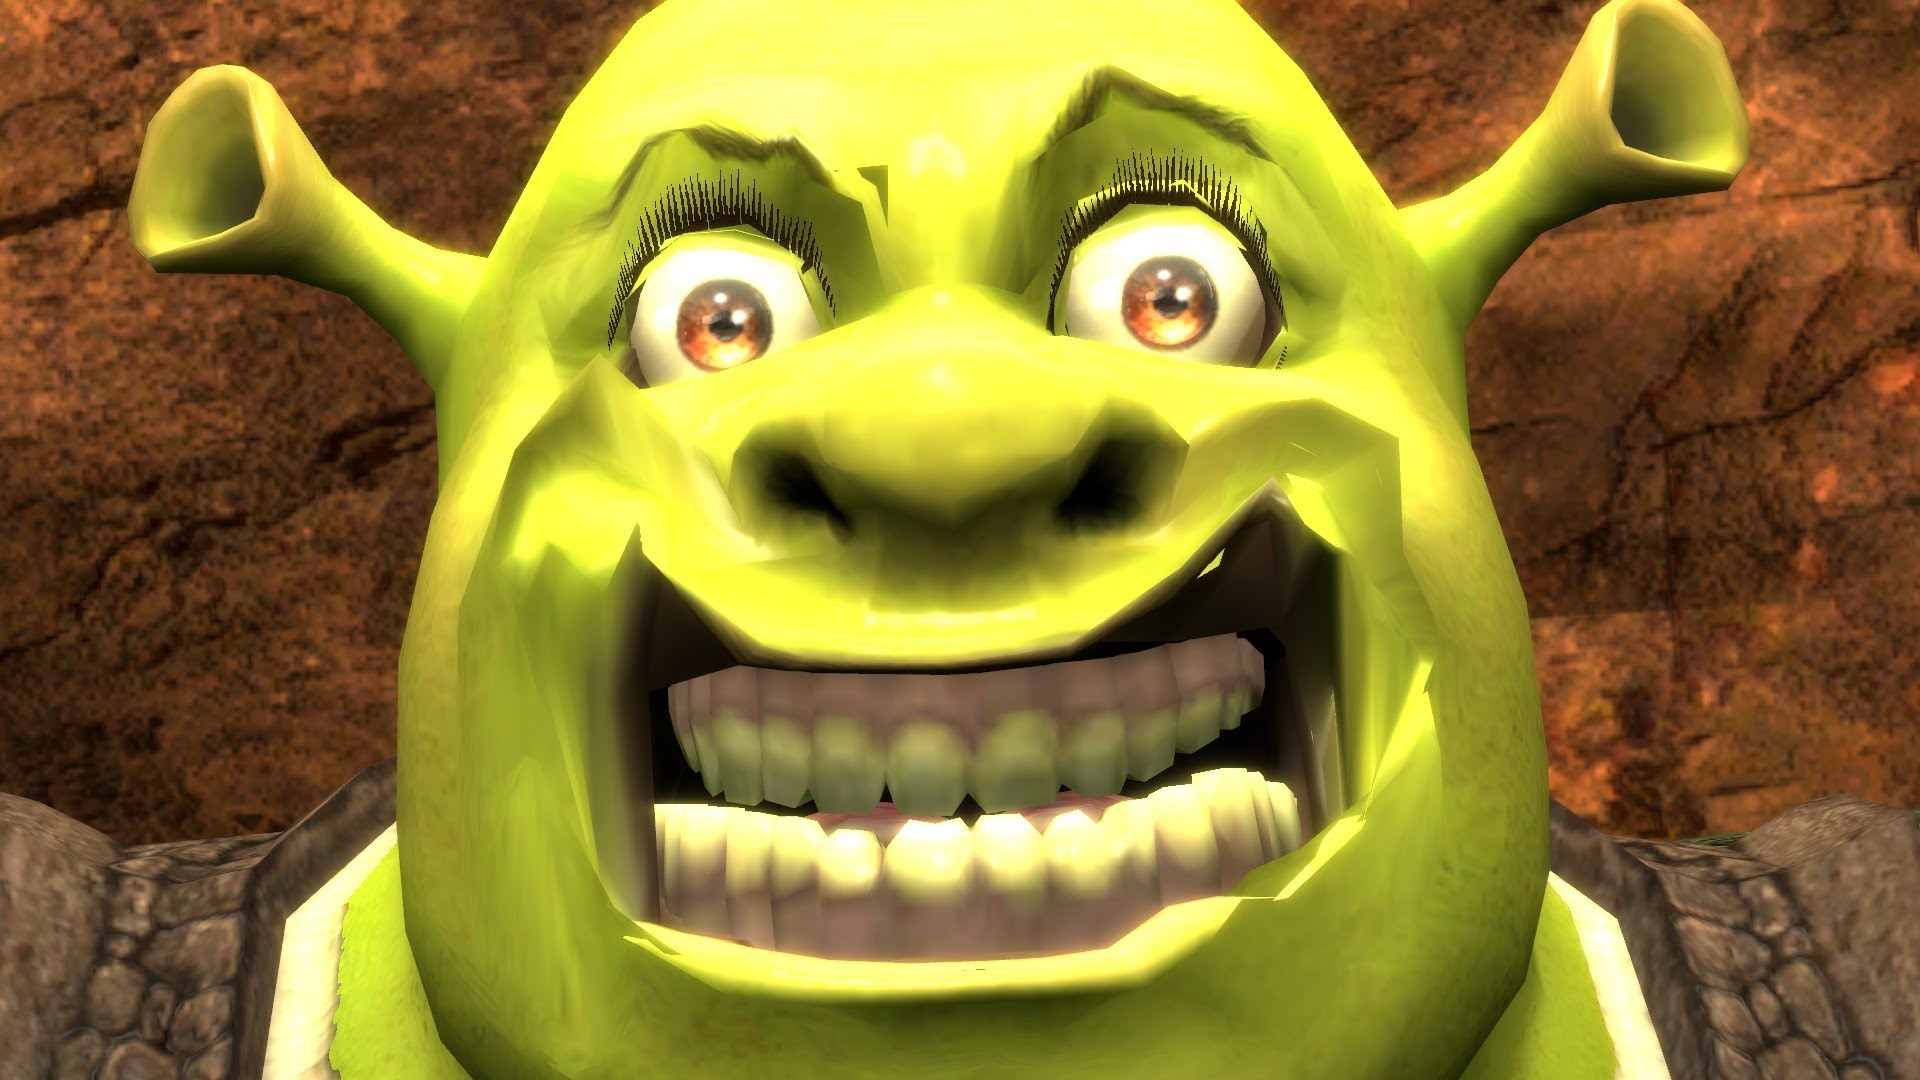 Shrek YTPH Shrek Busca Recuperar su Inconsistently